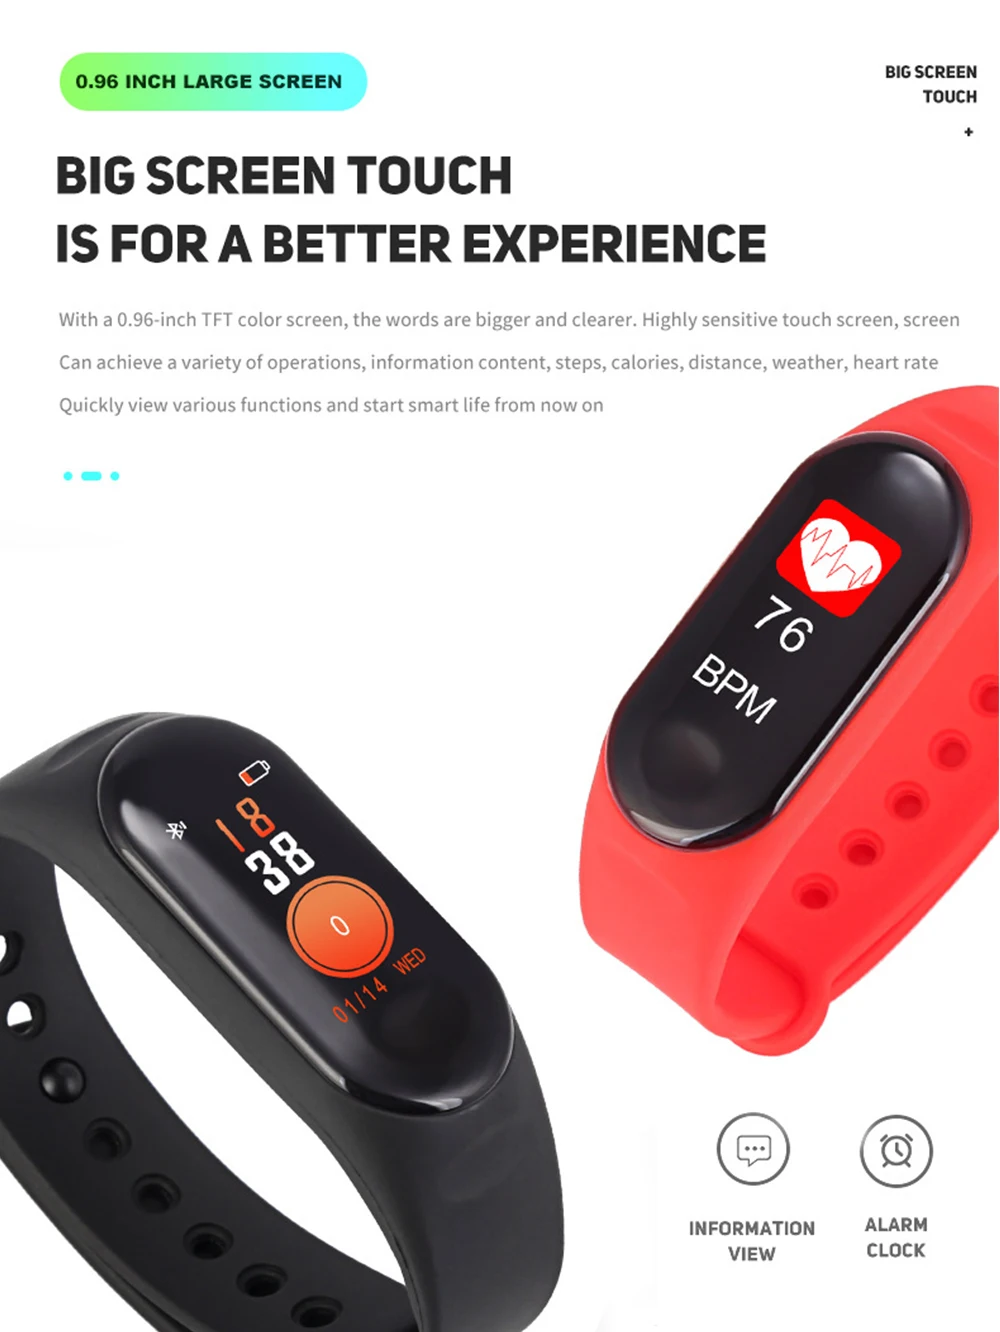 FXM часы мужские цифровые часы женские пульсометр кровяное давление фитнес трекер спортивные умные мужские часы IOS Android